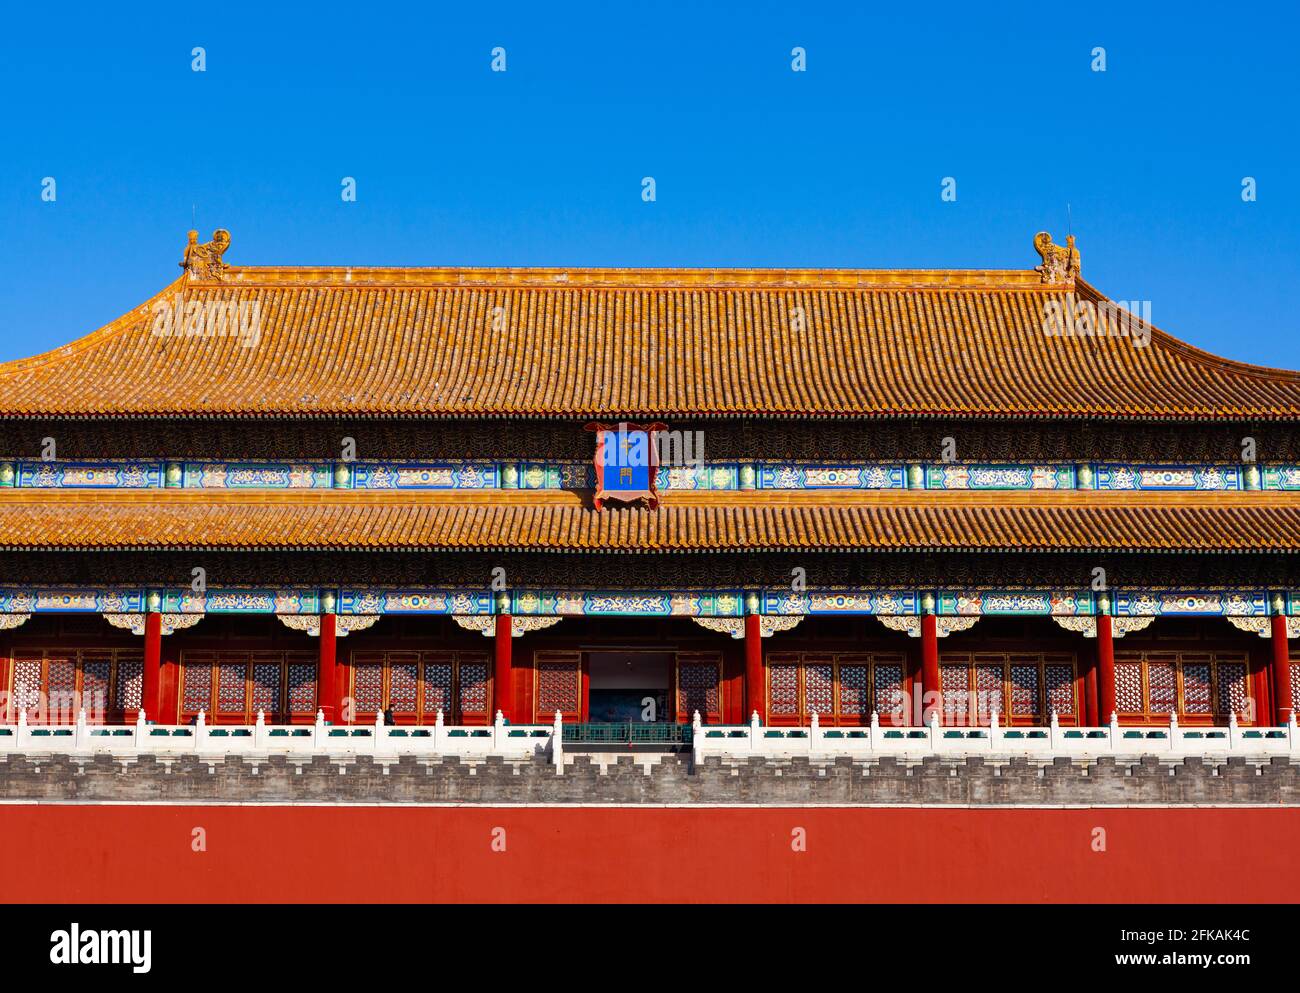 Beijing famous building the Forbidden City Stock Photo